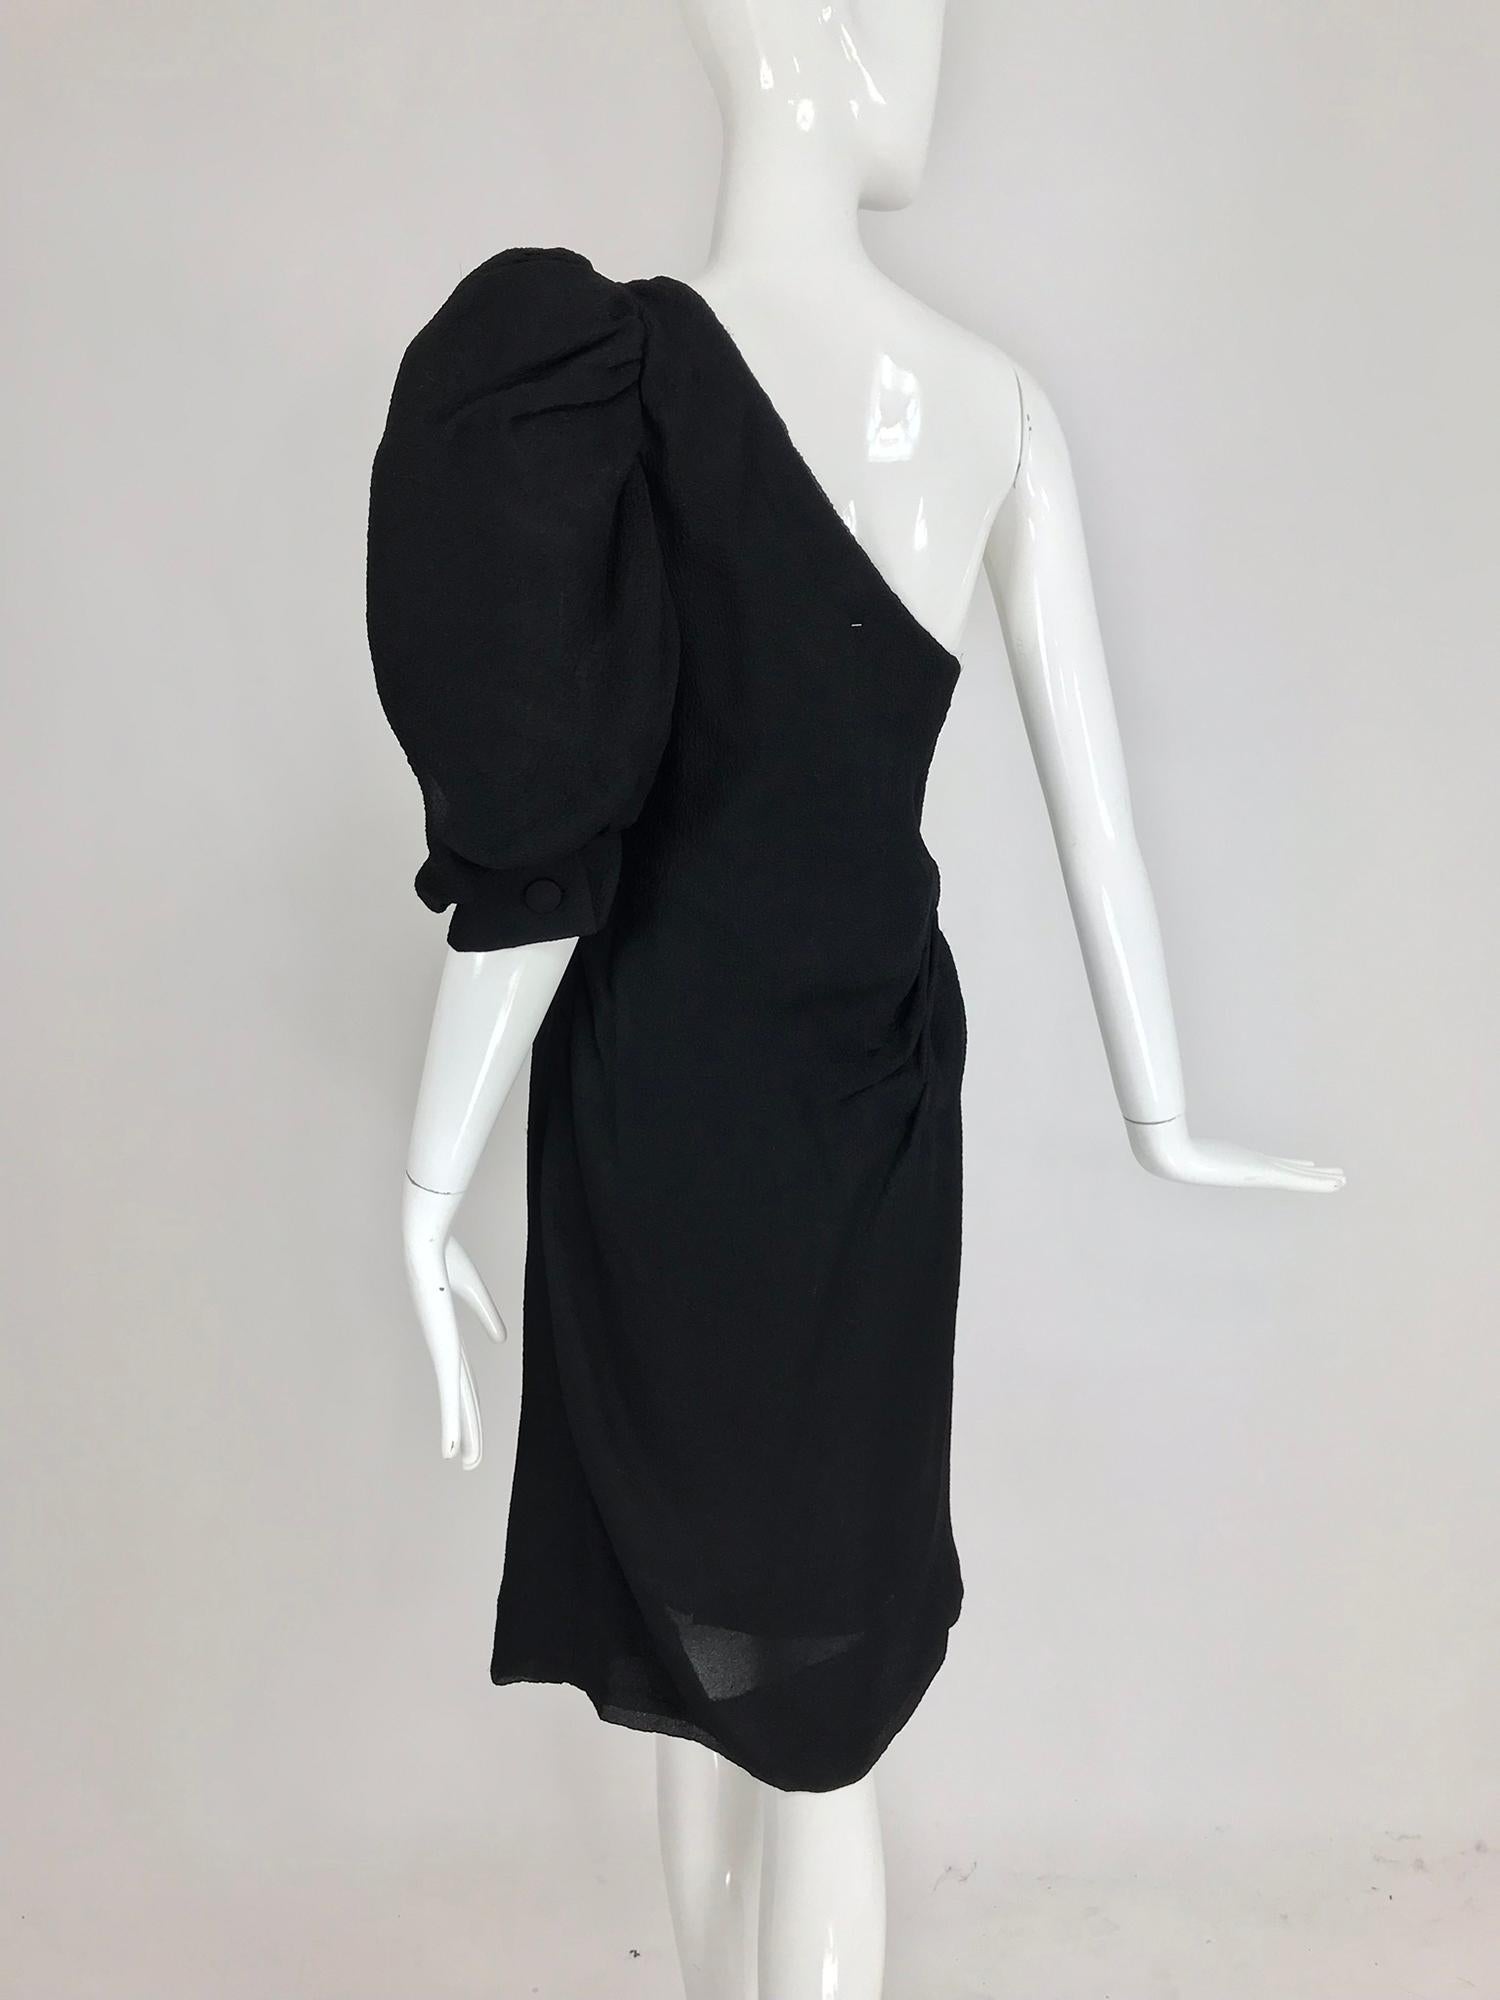 Givenchy black matelassé silk one shoulder cocktail dress 1990s 1